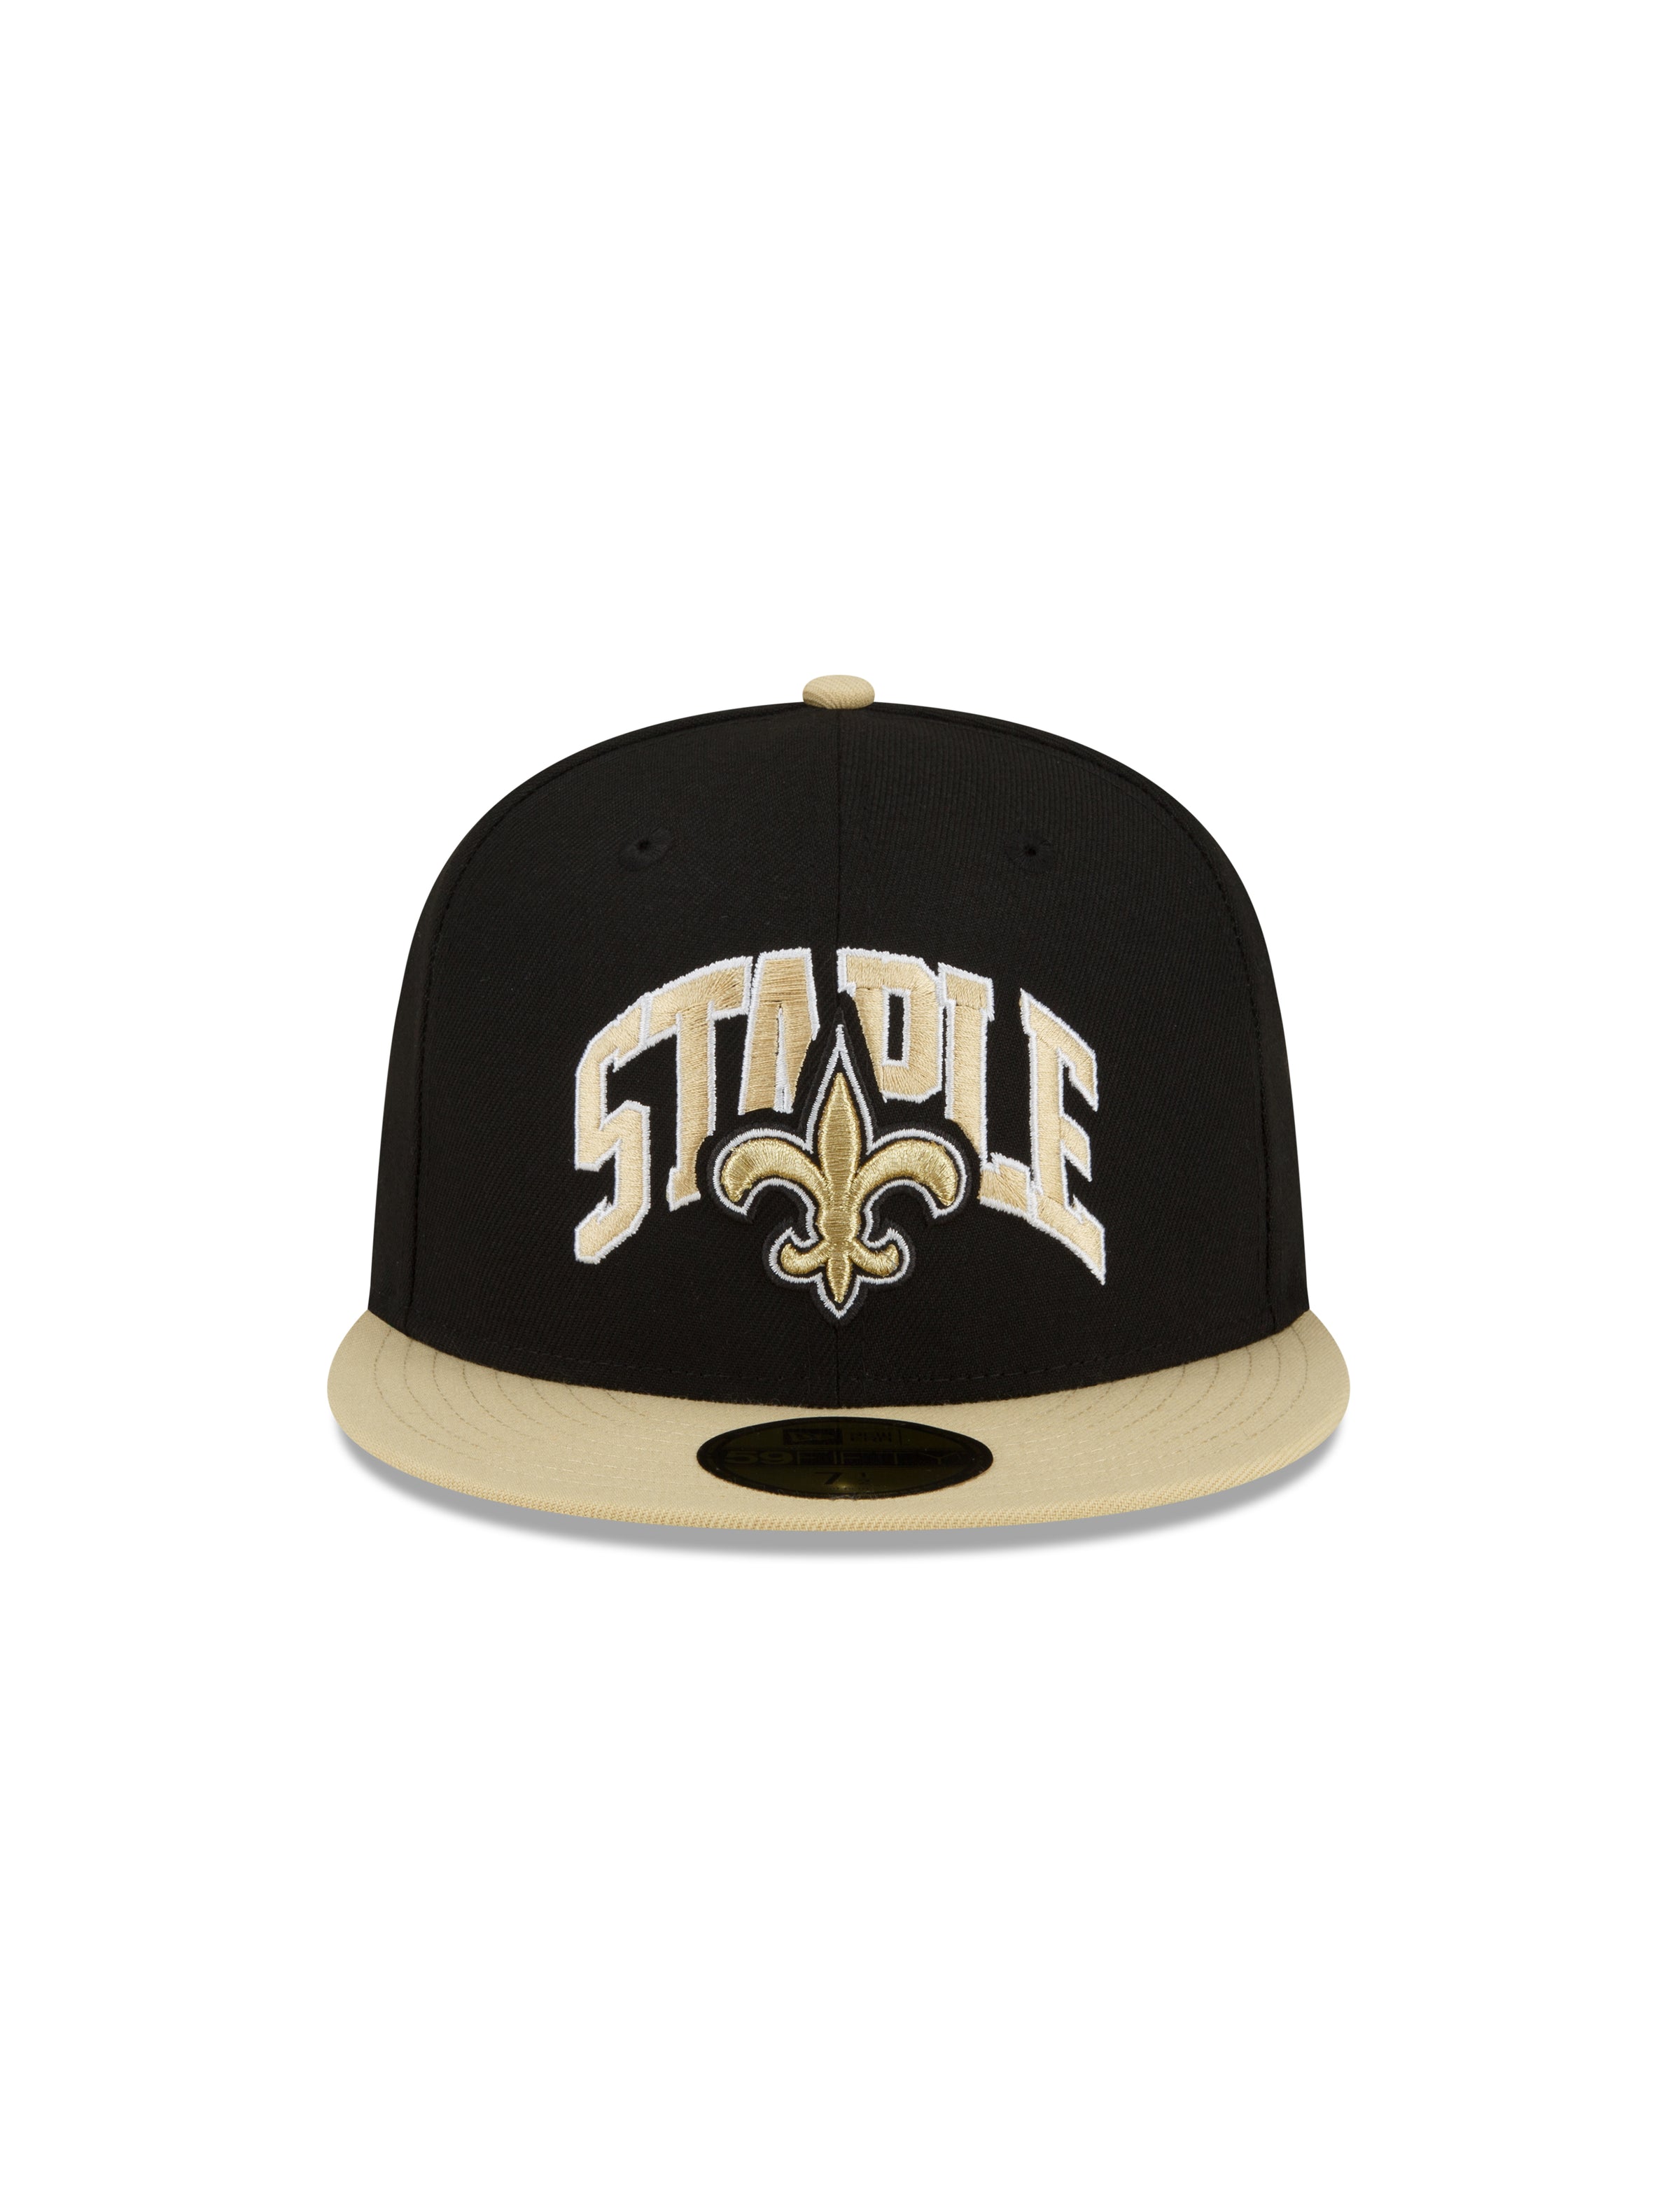 New Orleans Saints NFL New Era Stretch Fit Hat